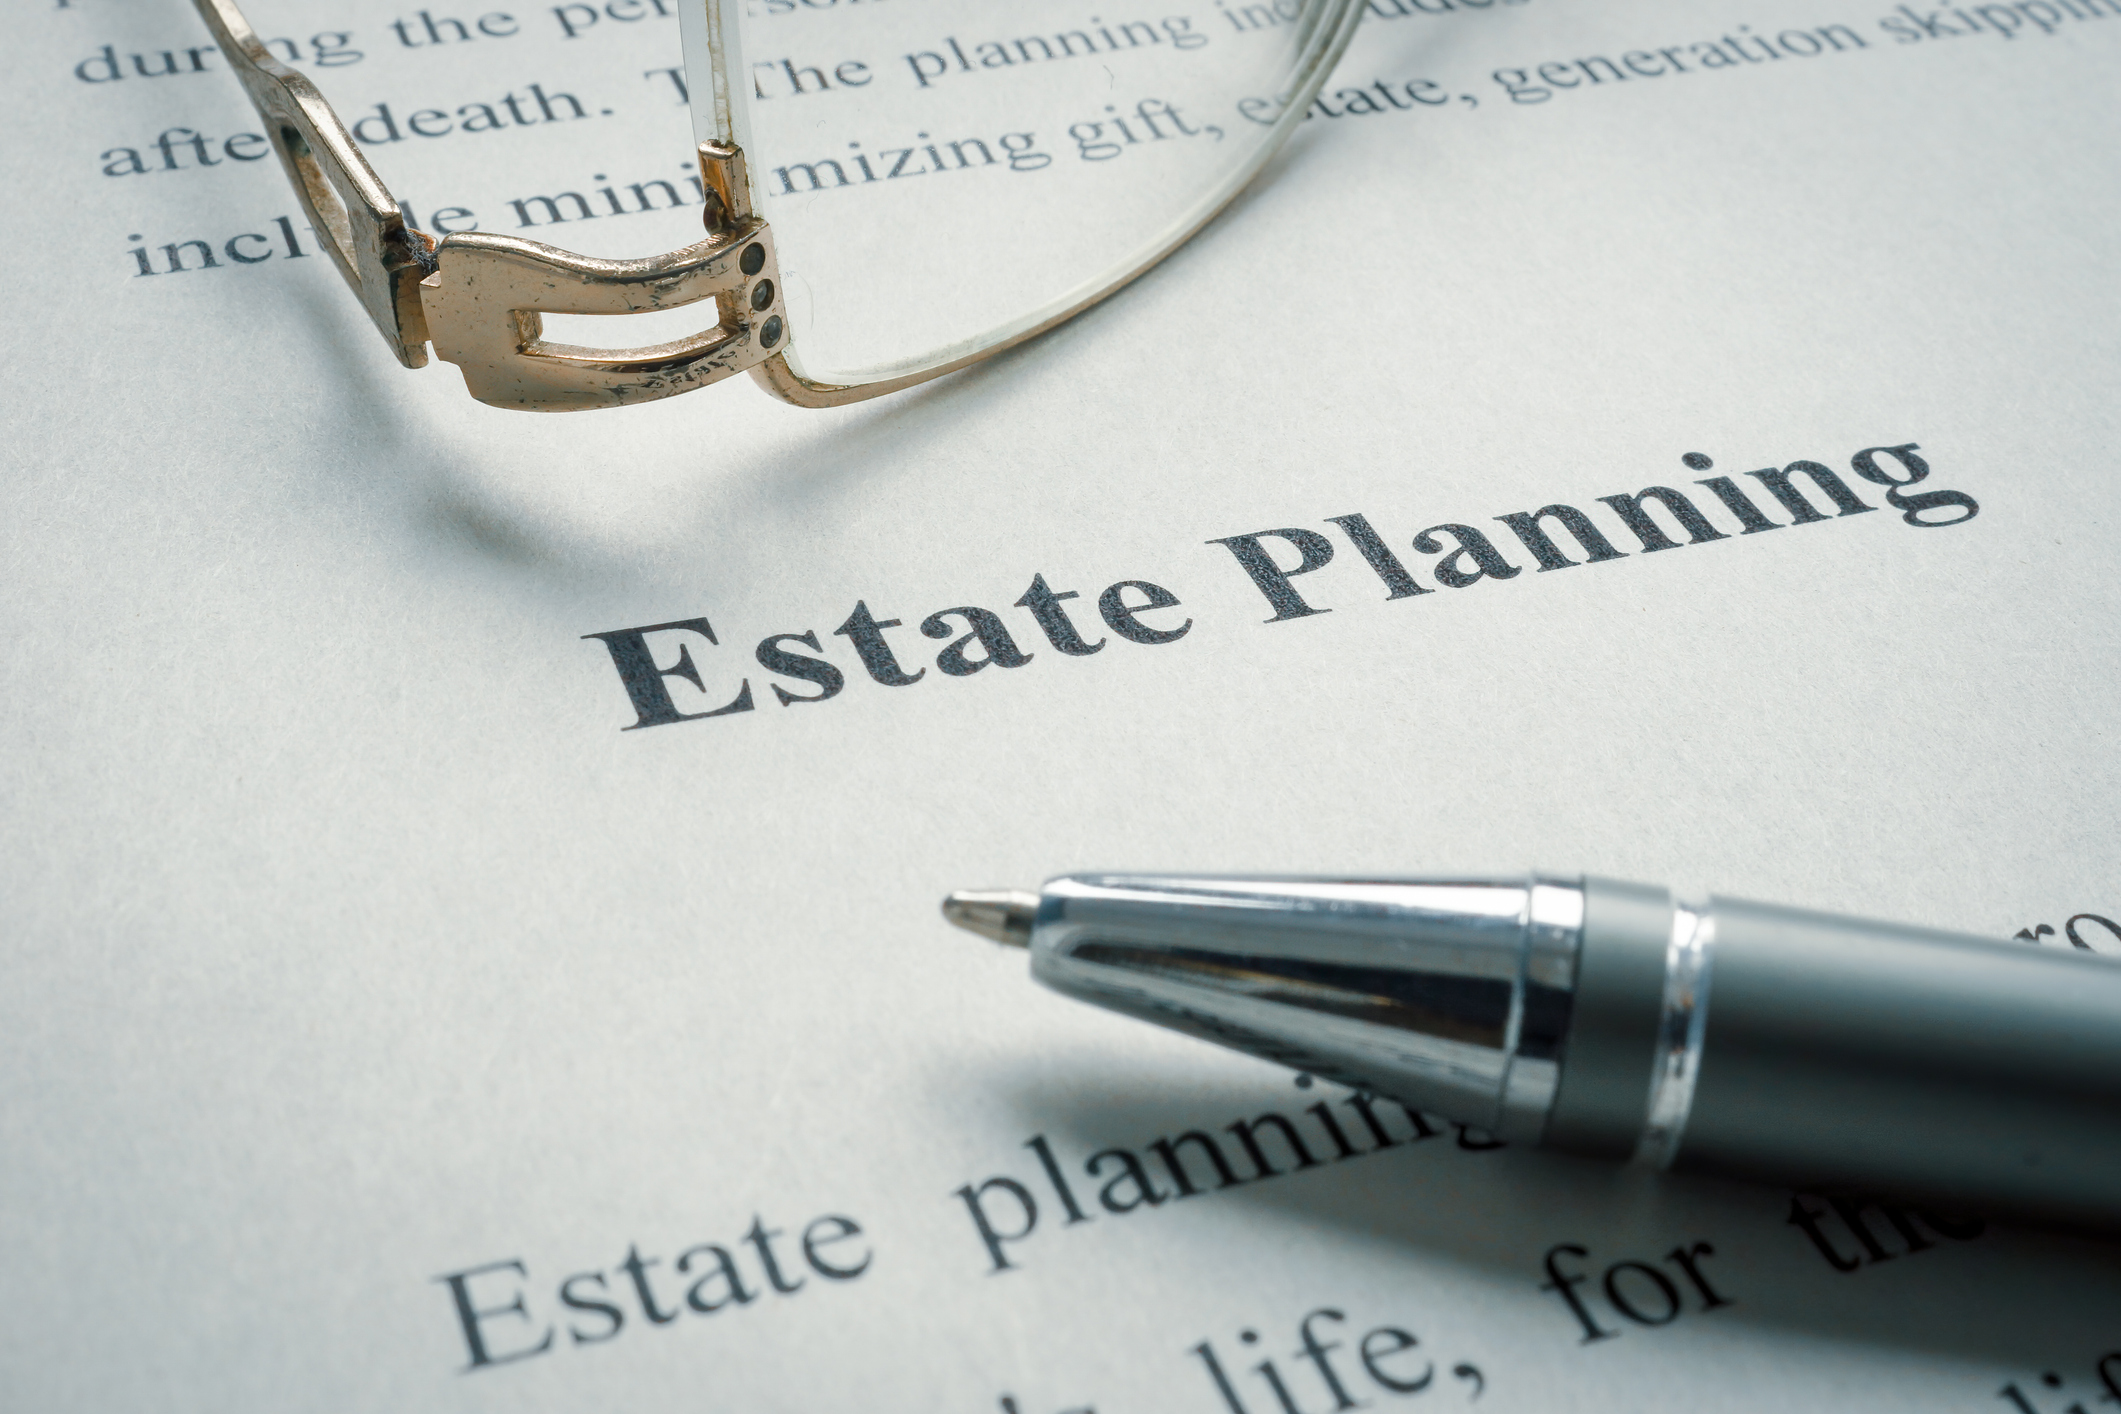 Information about Estate planning (Photo: iStock - designer491)